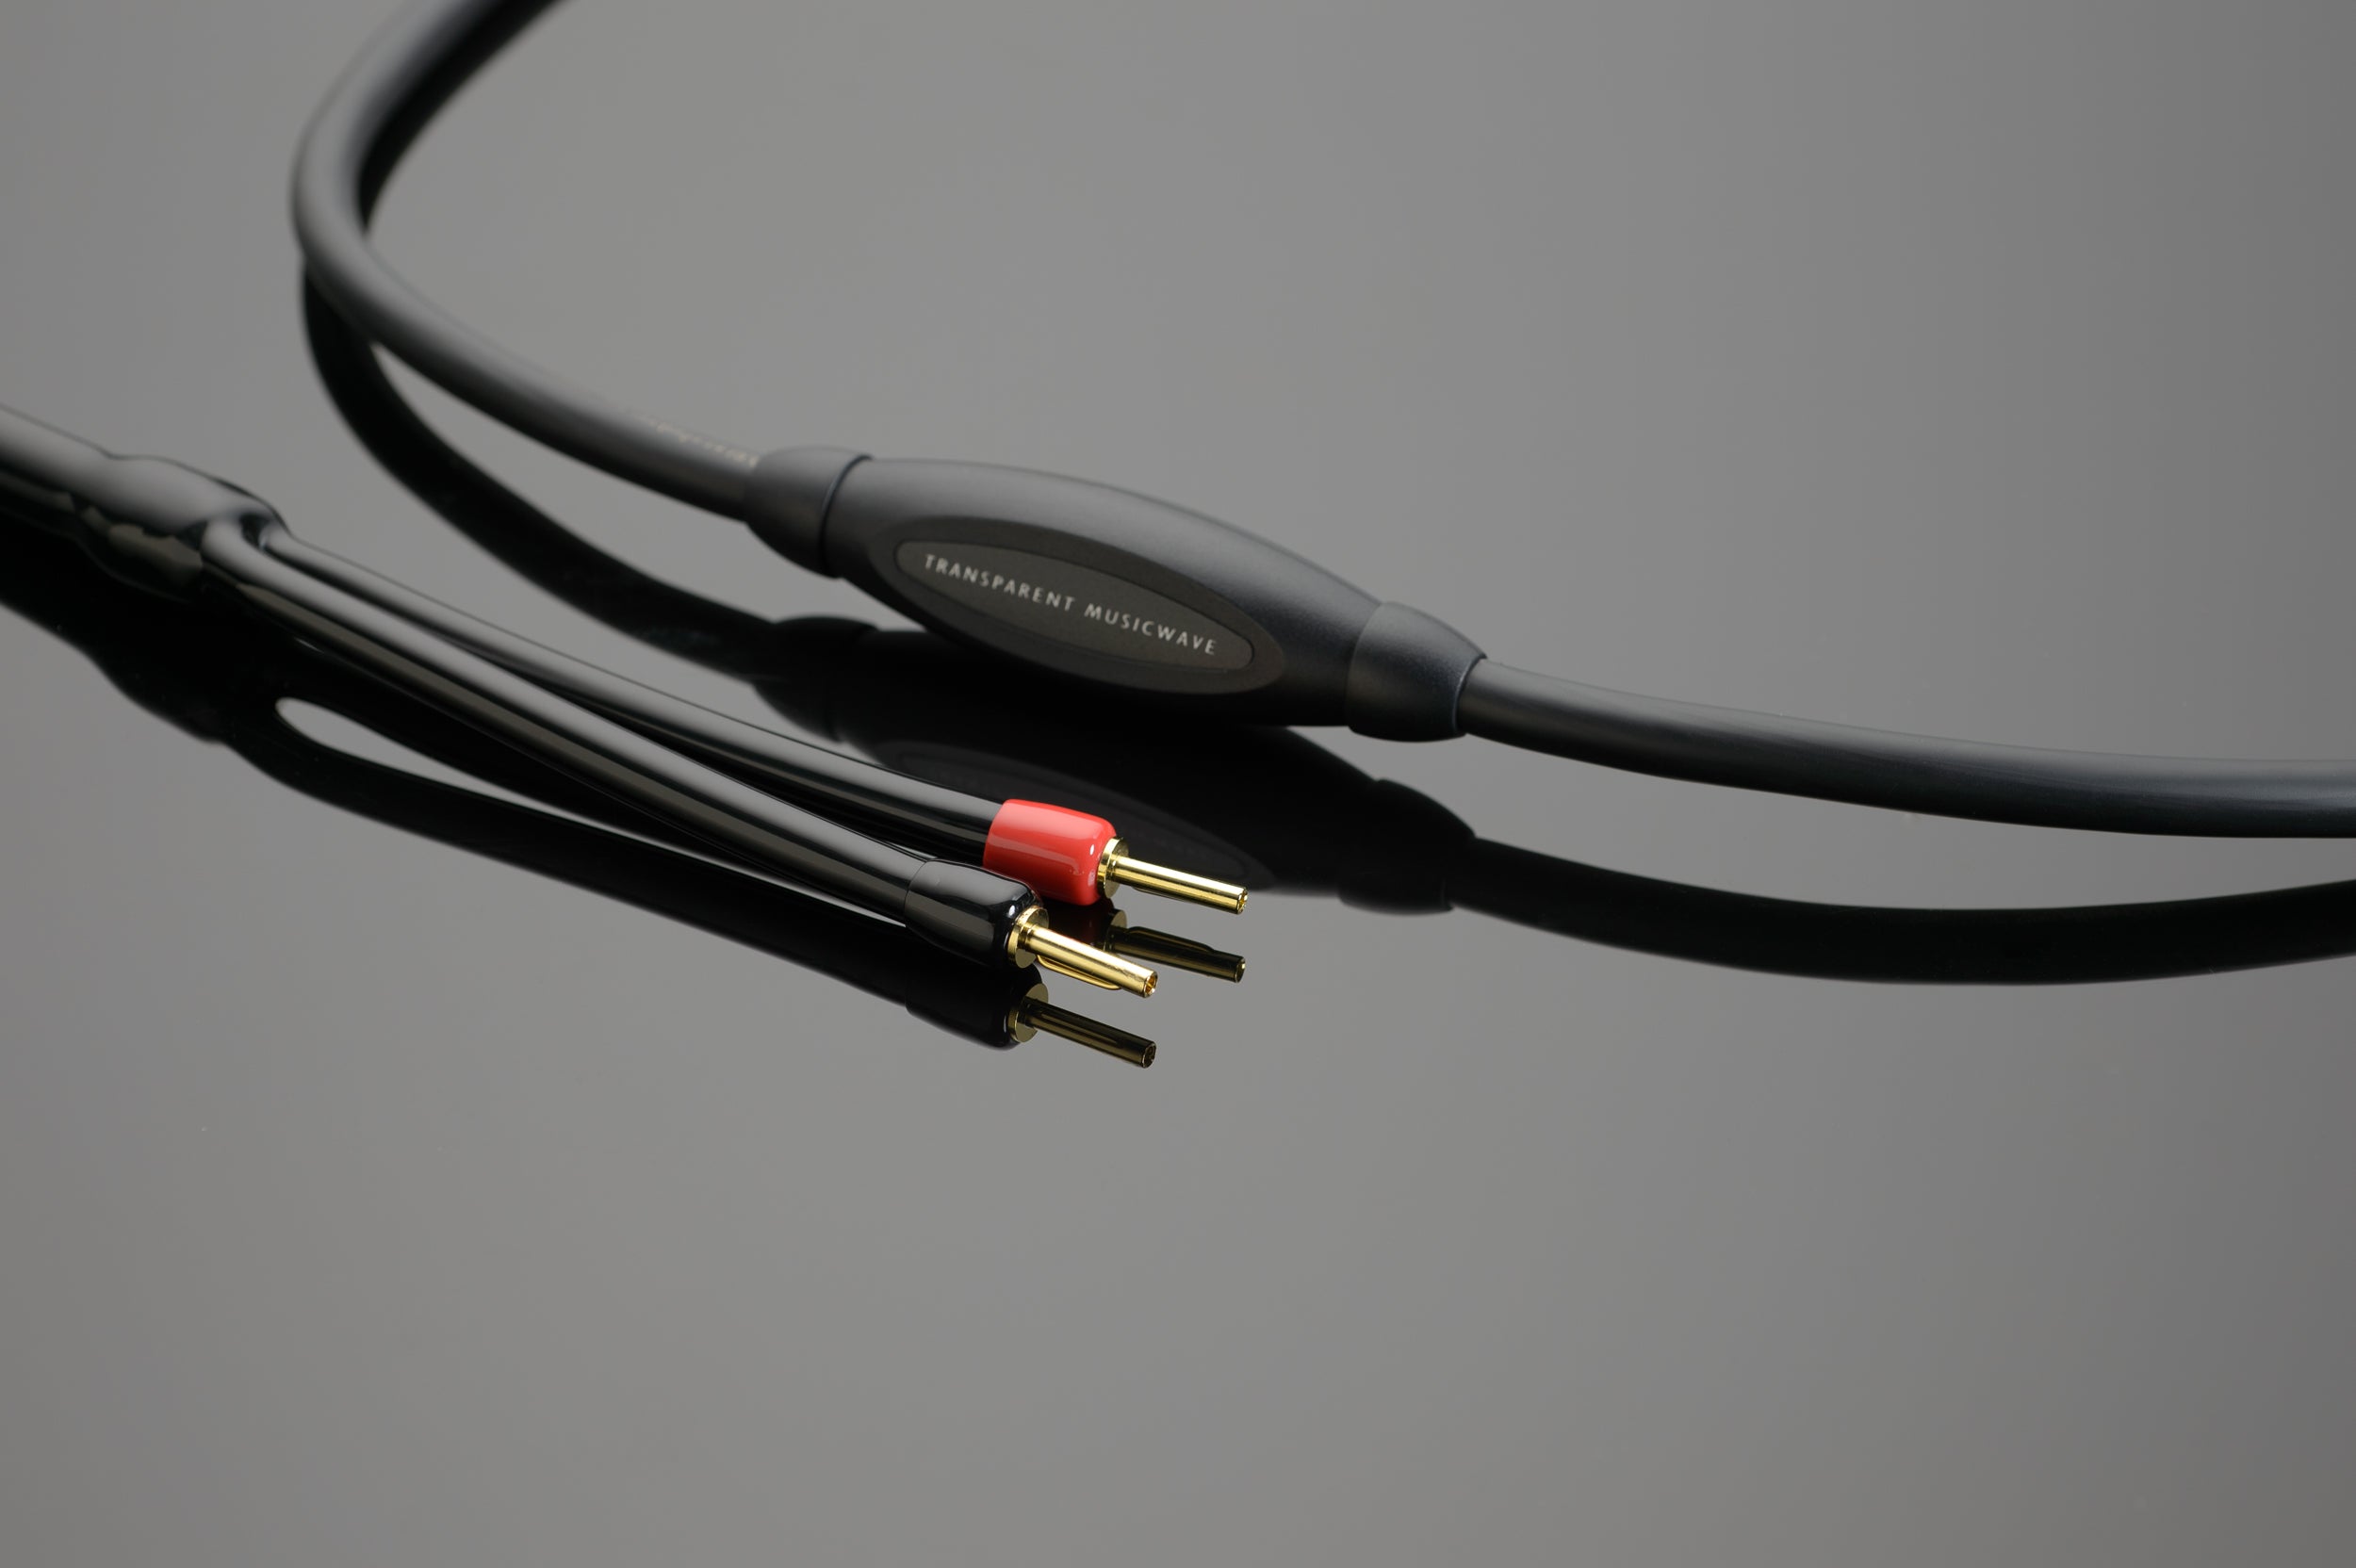 Transparent MusicWave Speaker Cable